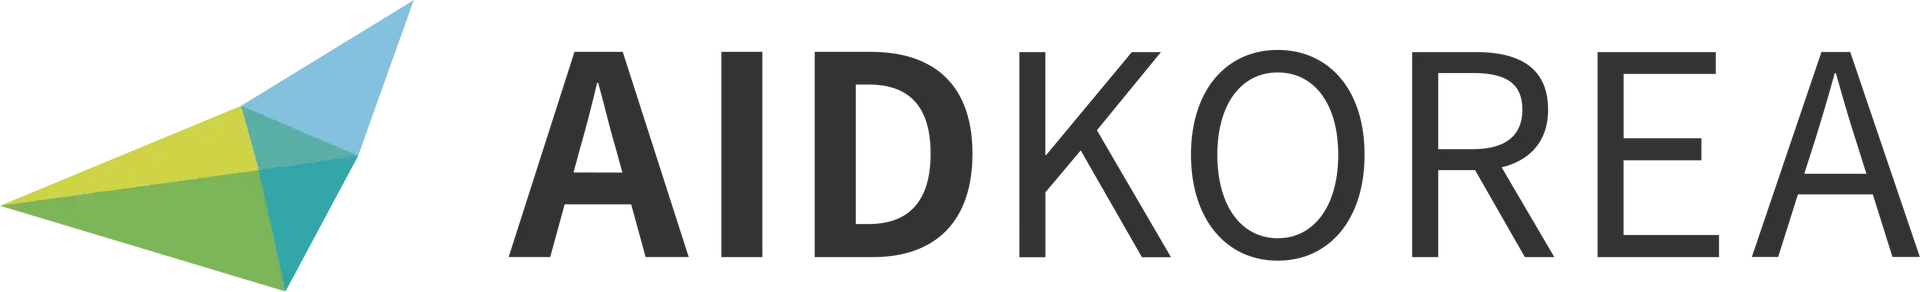 aidkorea logo